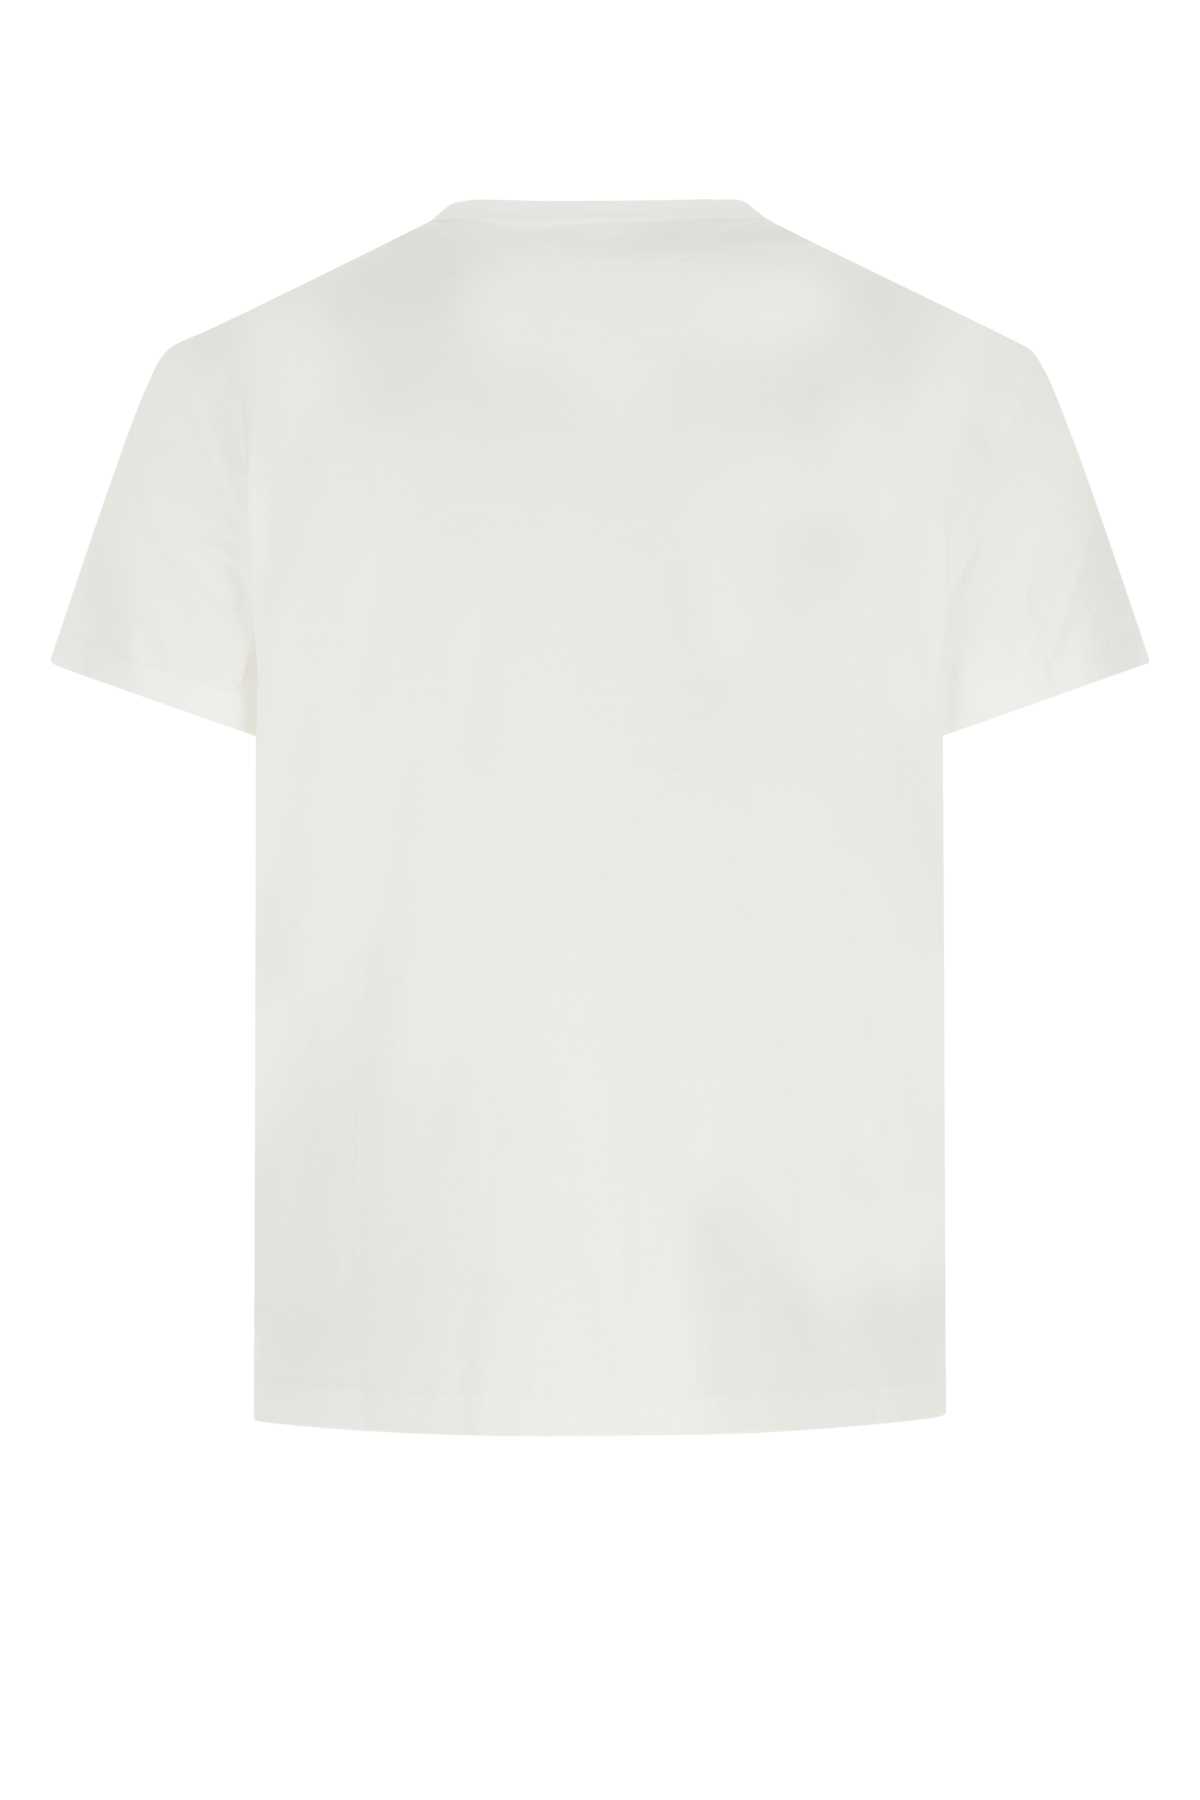 Maison Margiela White Cotton T-shirt In 994